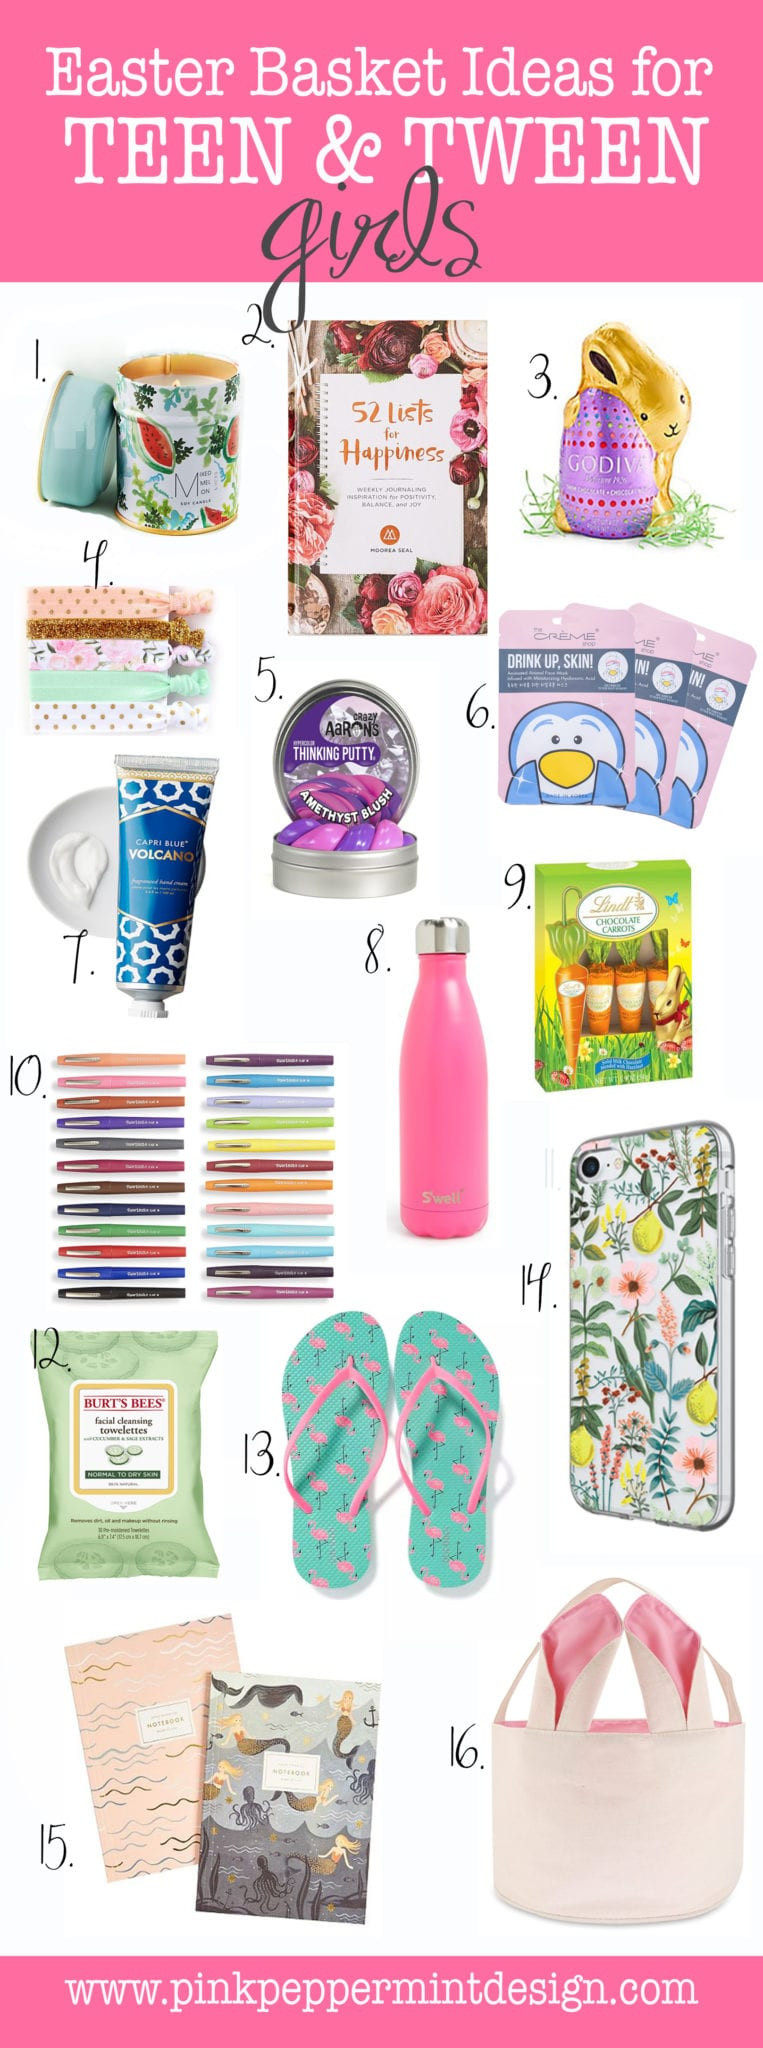 Teenager Gift Basket Ideas
 Best Easter Basket Gift Ideas for Tween & Teenage Girls